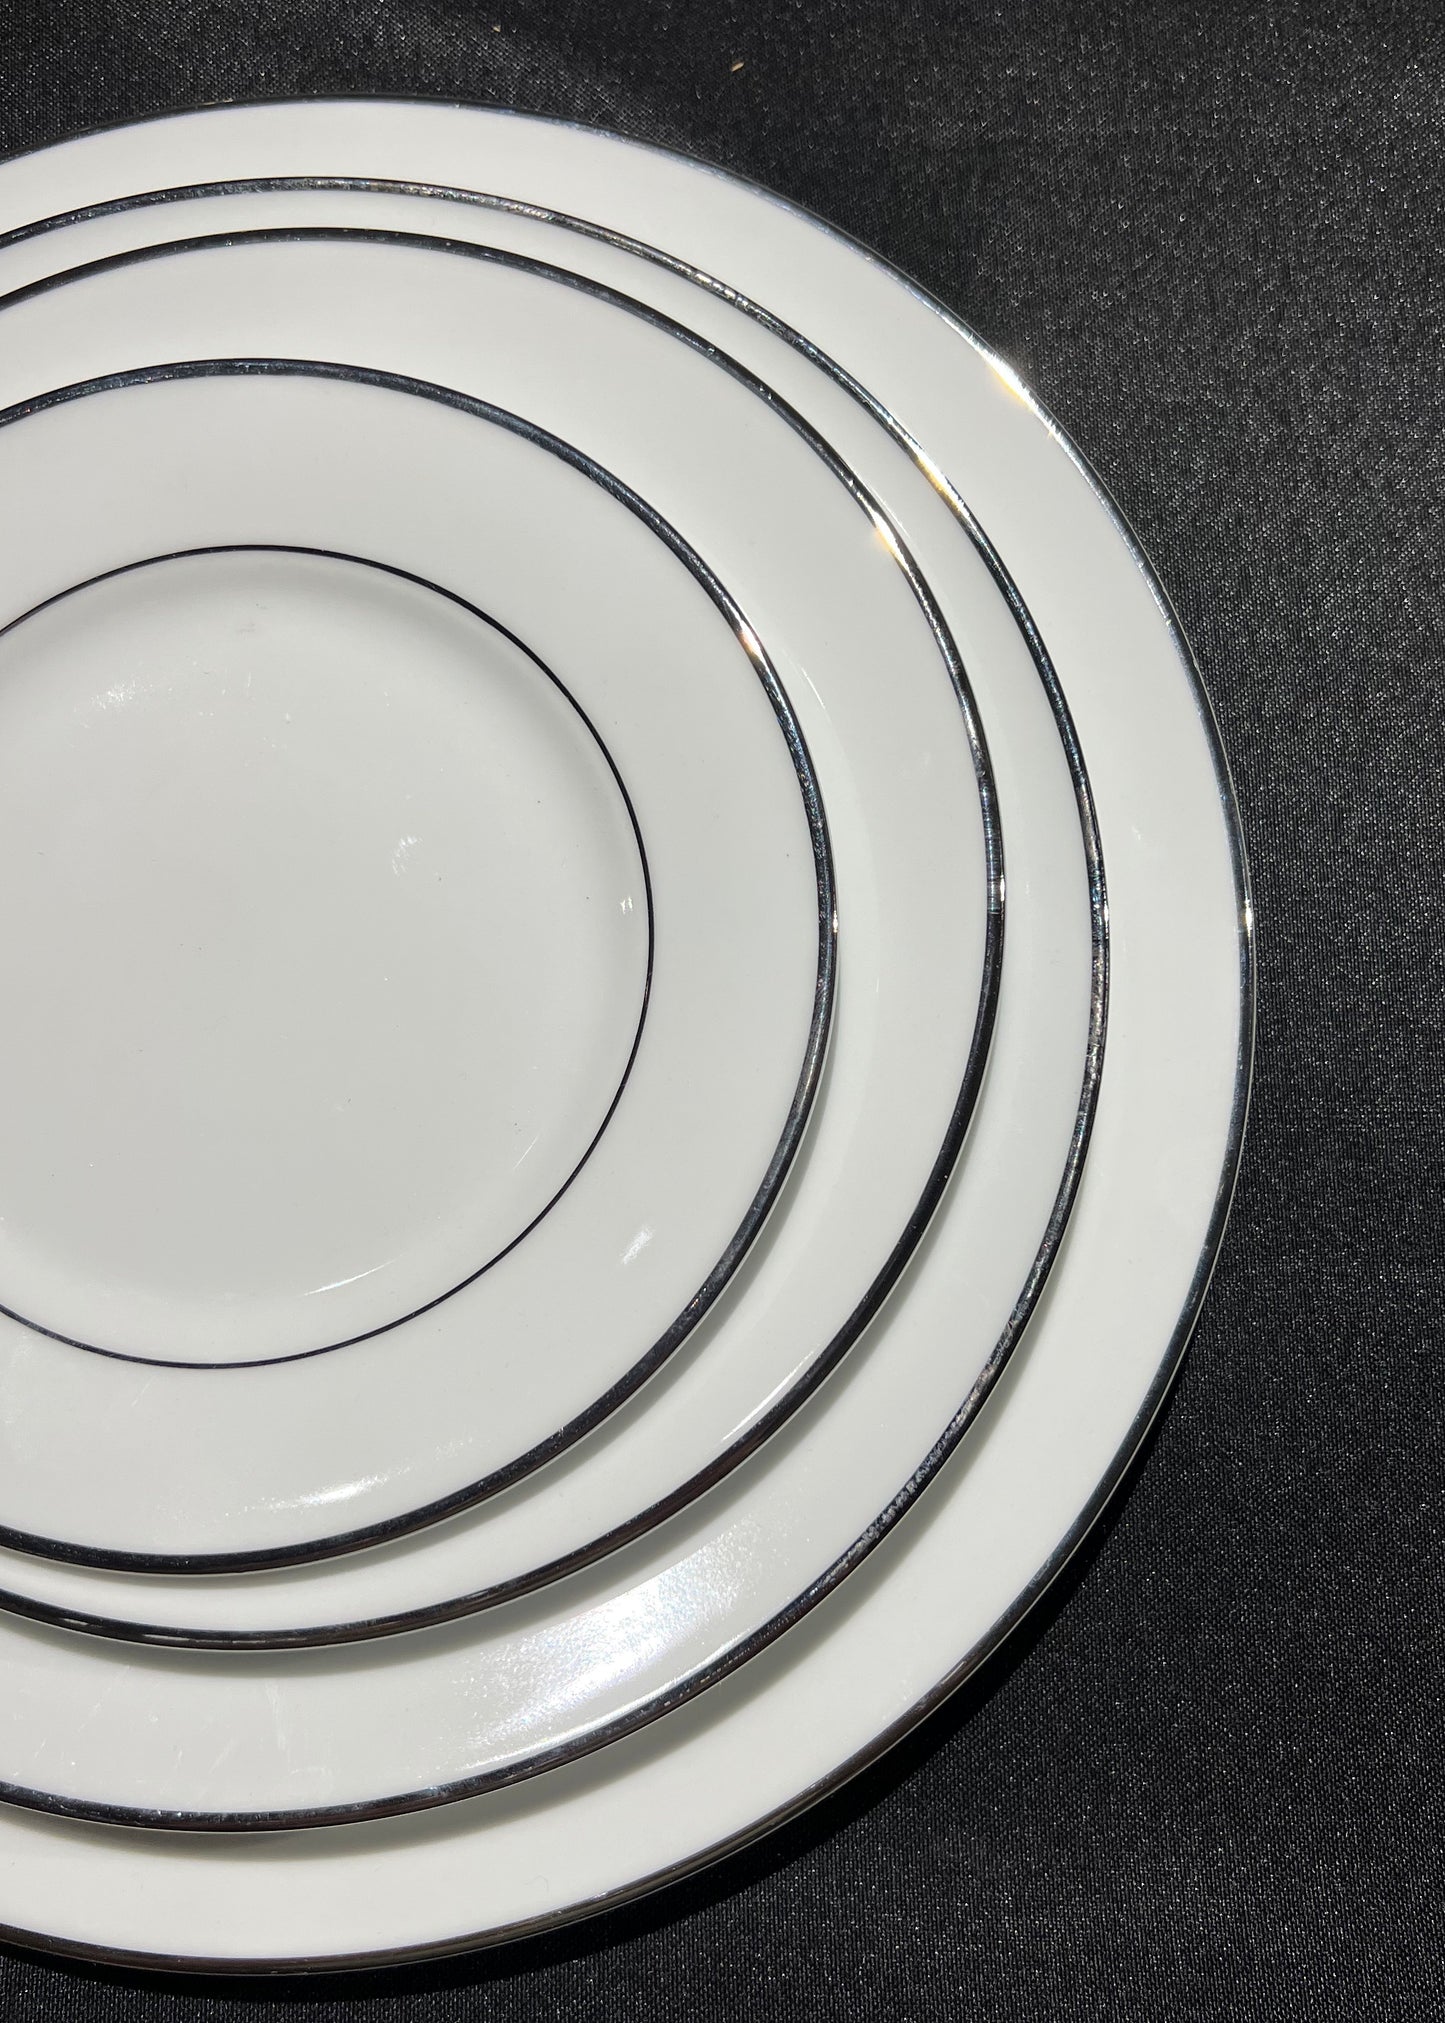 Silver Rim Salad Plate